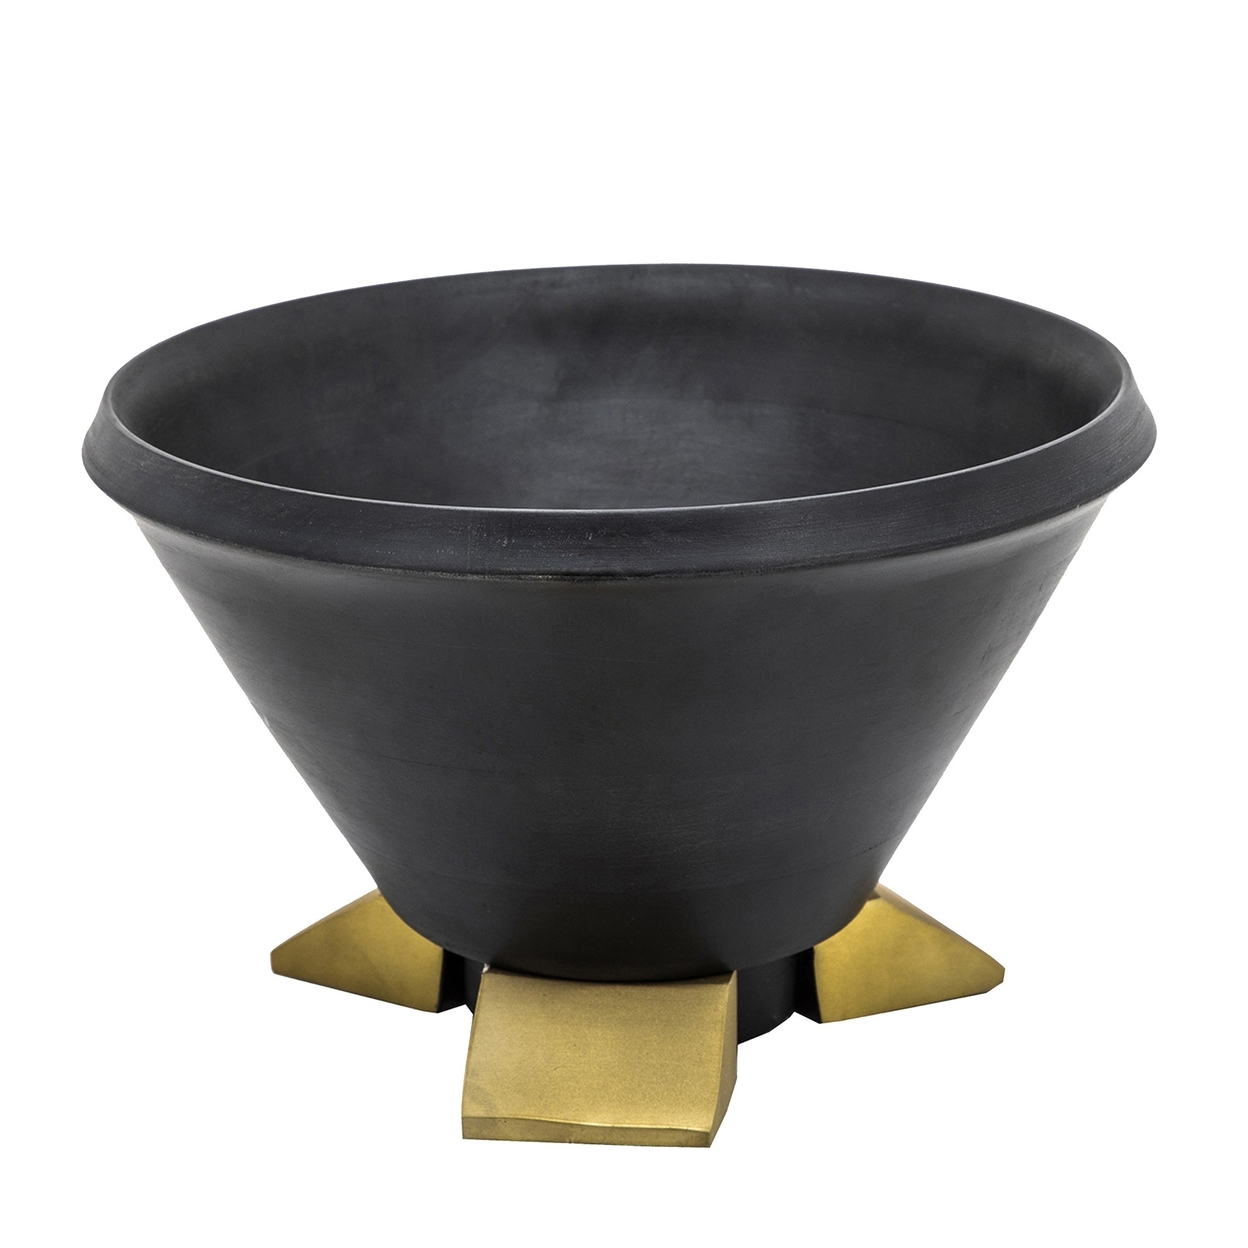 12 Inch Decorative Bowl Table Decor, Gold Metal Legs, Black Wood Bowl -Saltoro Sherpi